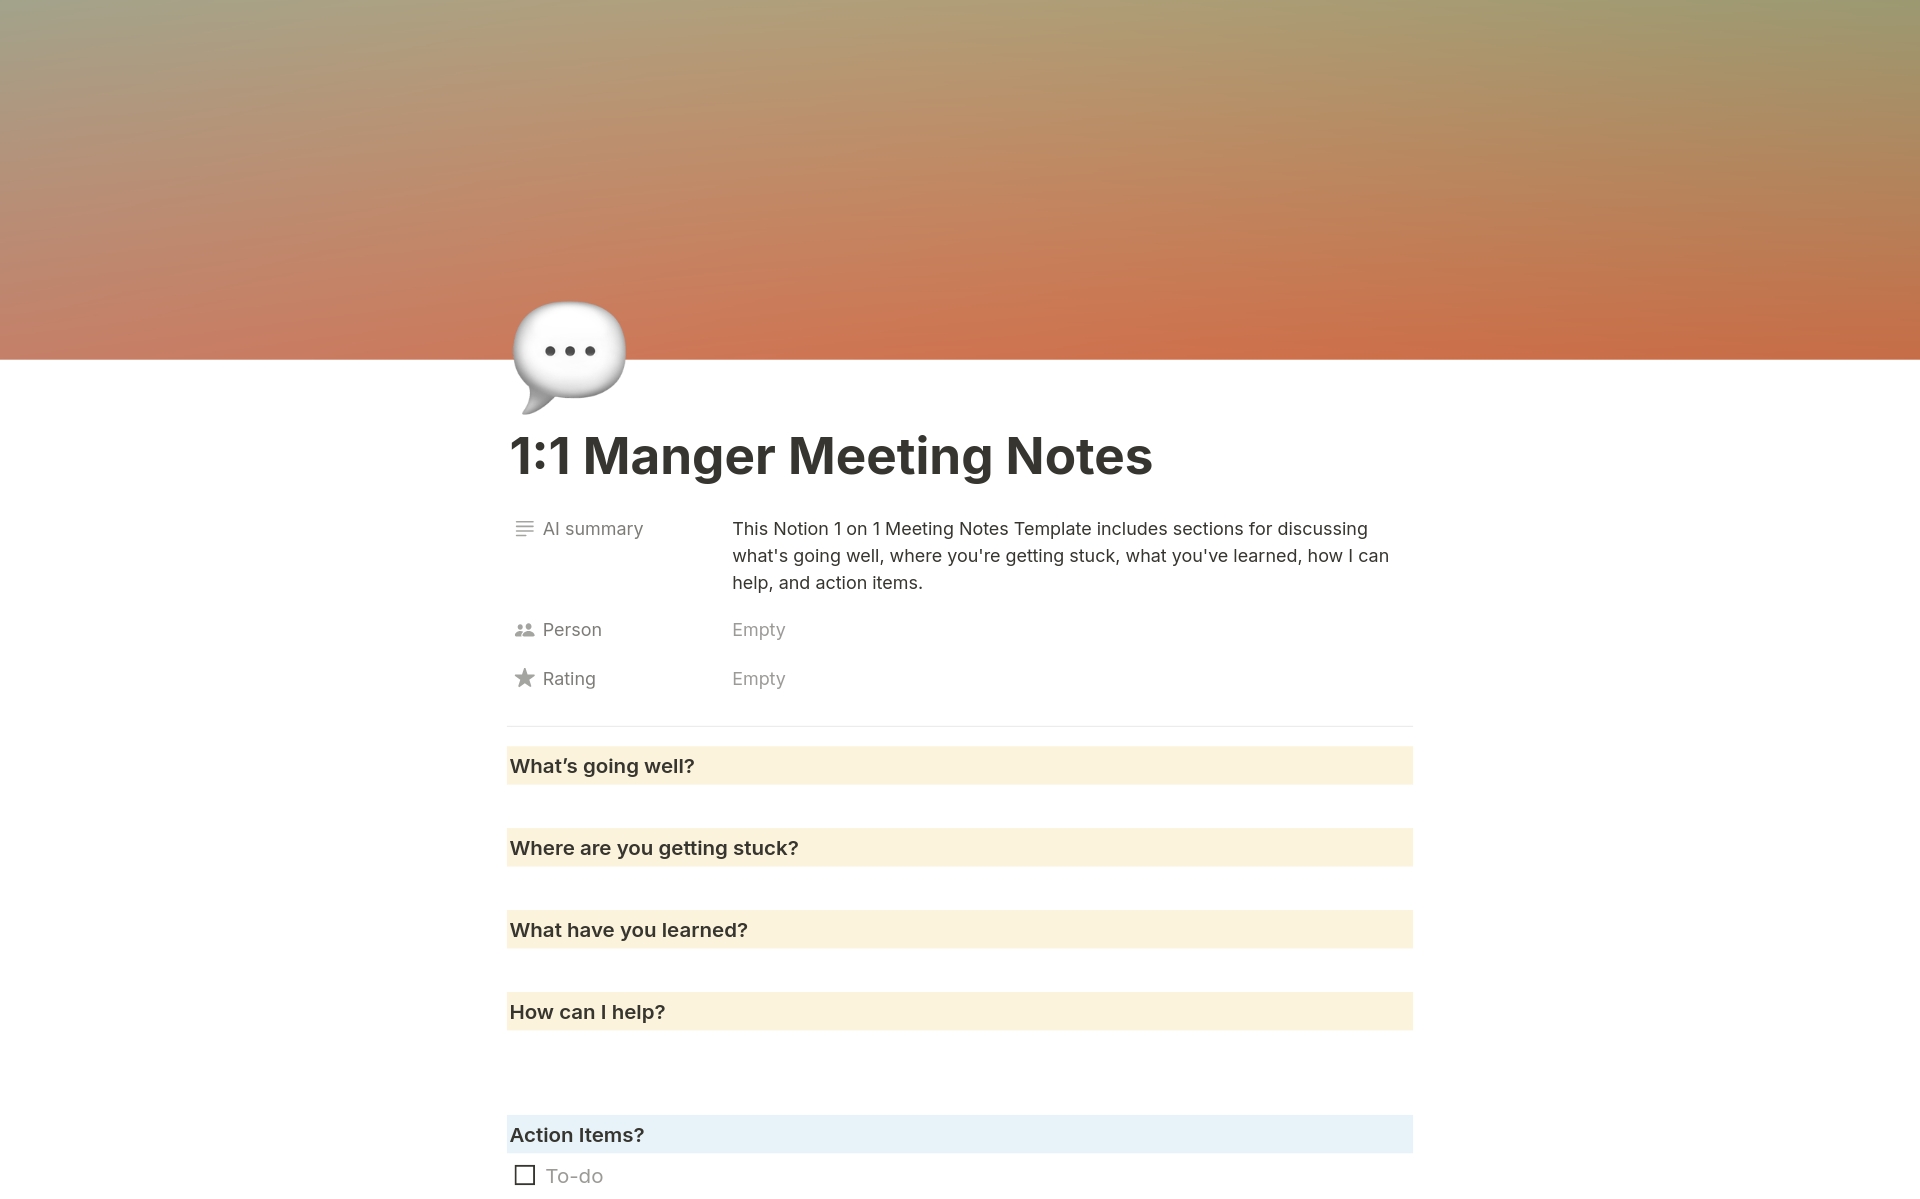 1:1 Manager Meeting Notes 님의 템플릿 미리보기